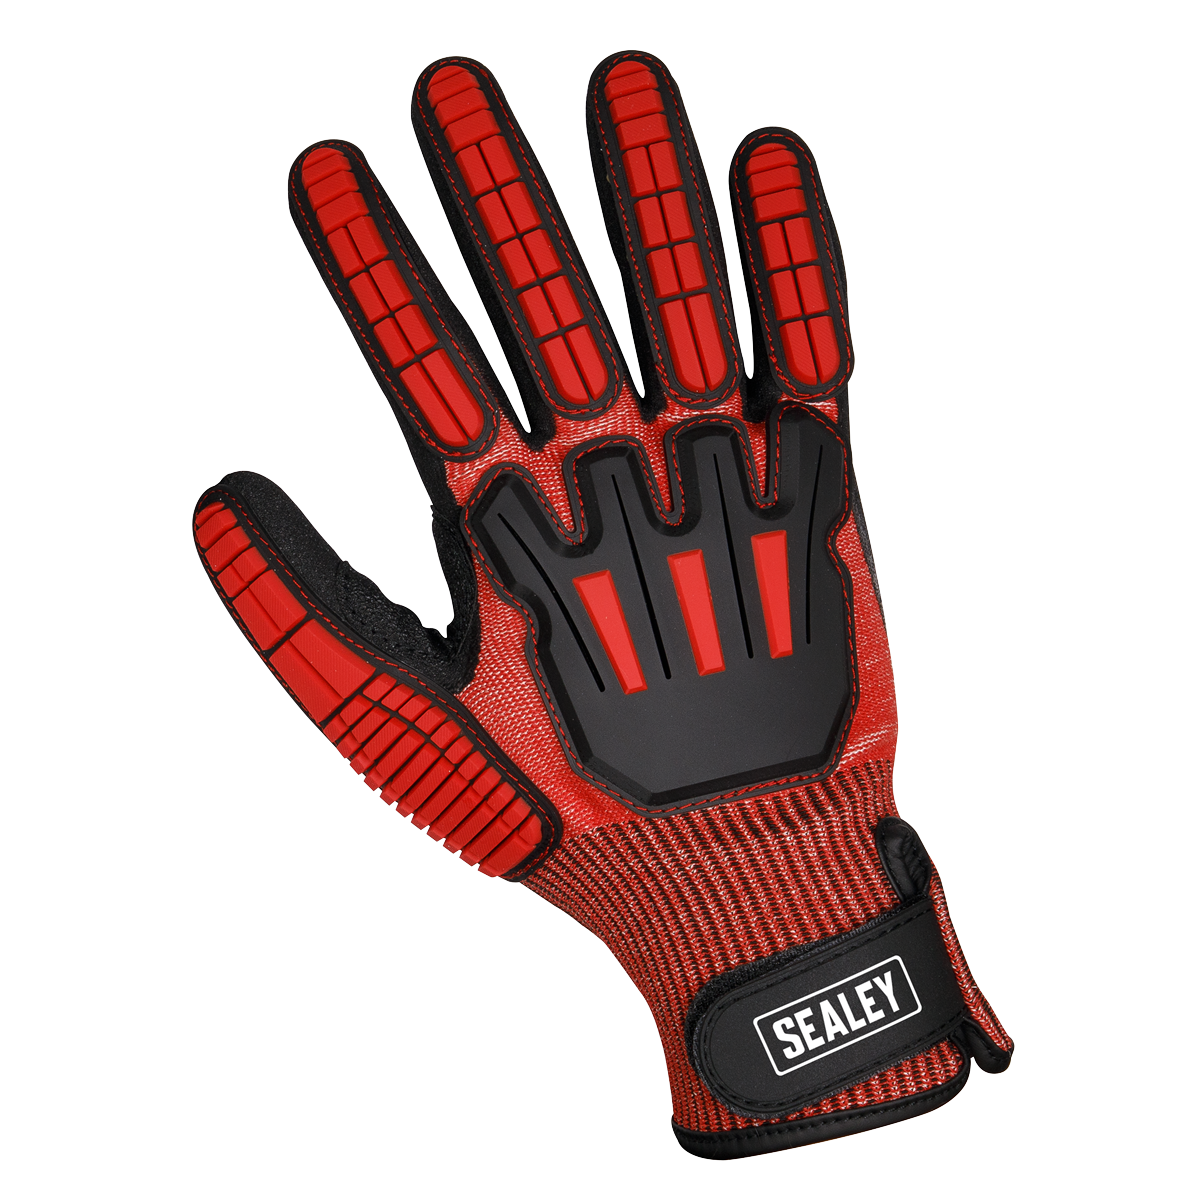 Cut & Impact Resistant Gloves - Pair